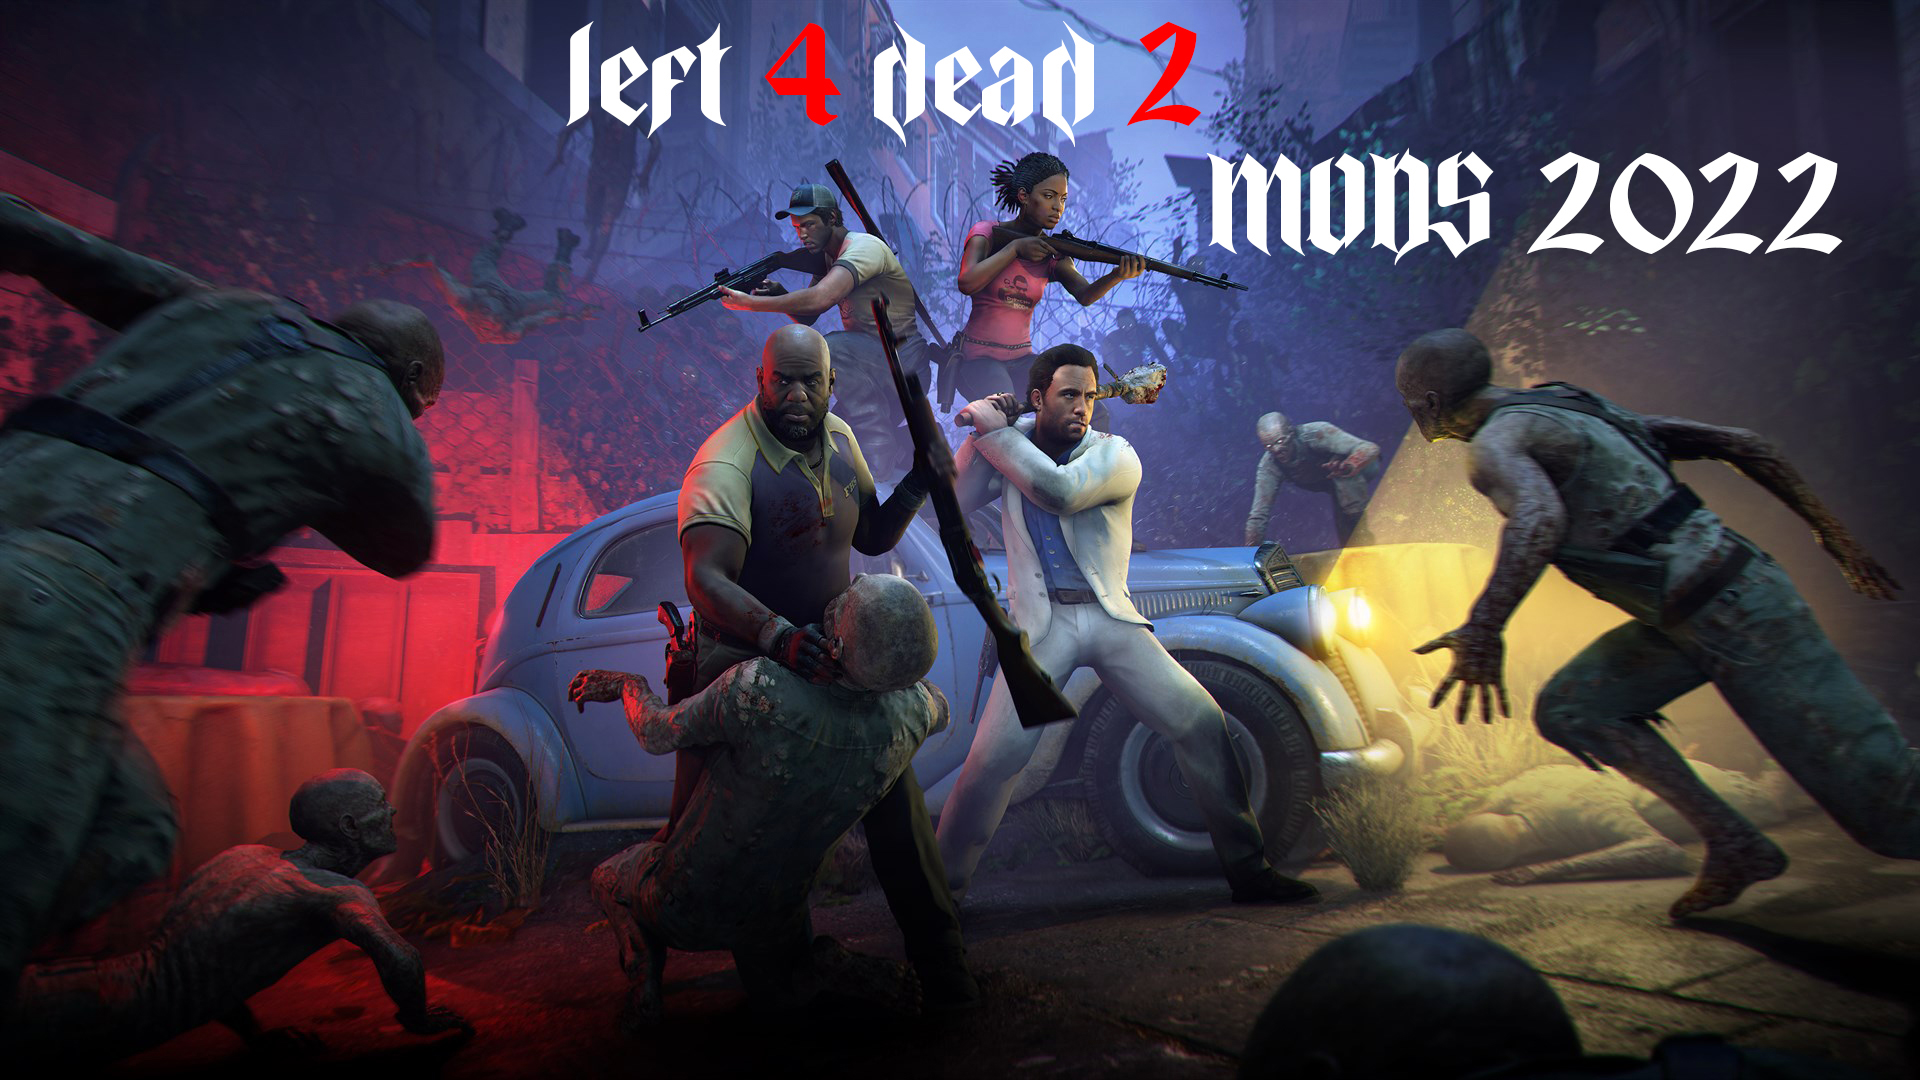 Steam WorkshopLeft 4 Dead 2 MODS 2022 image